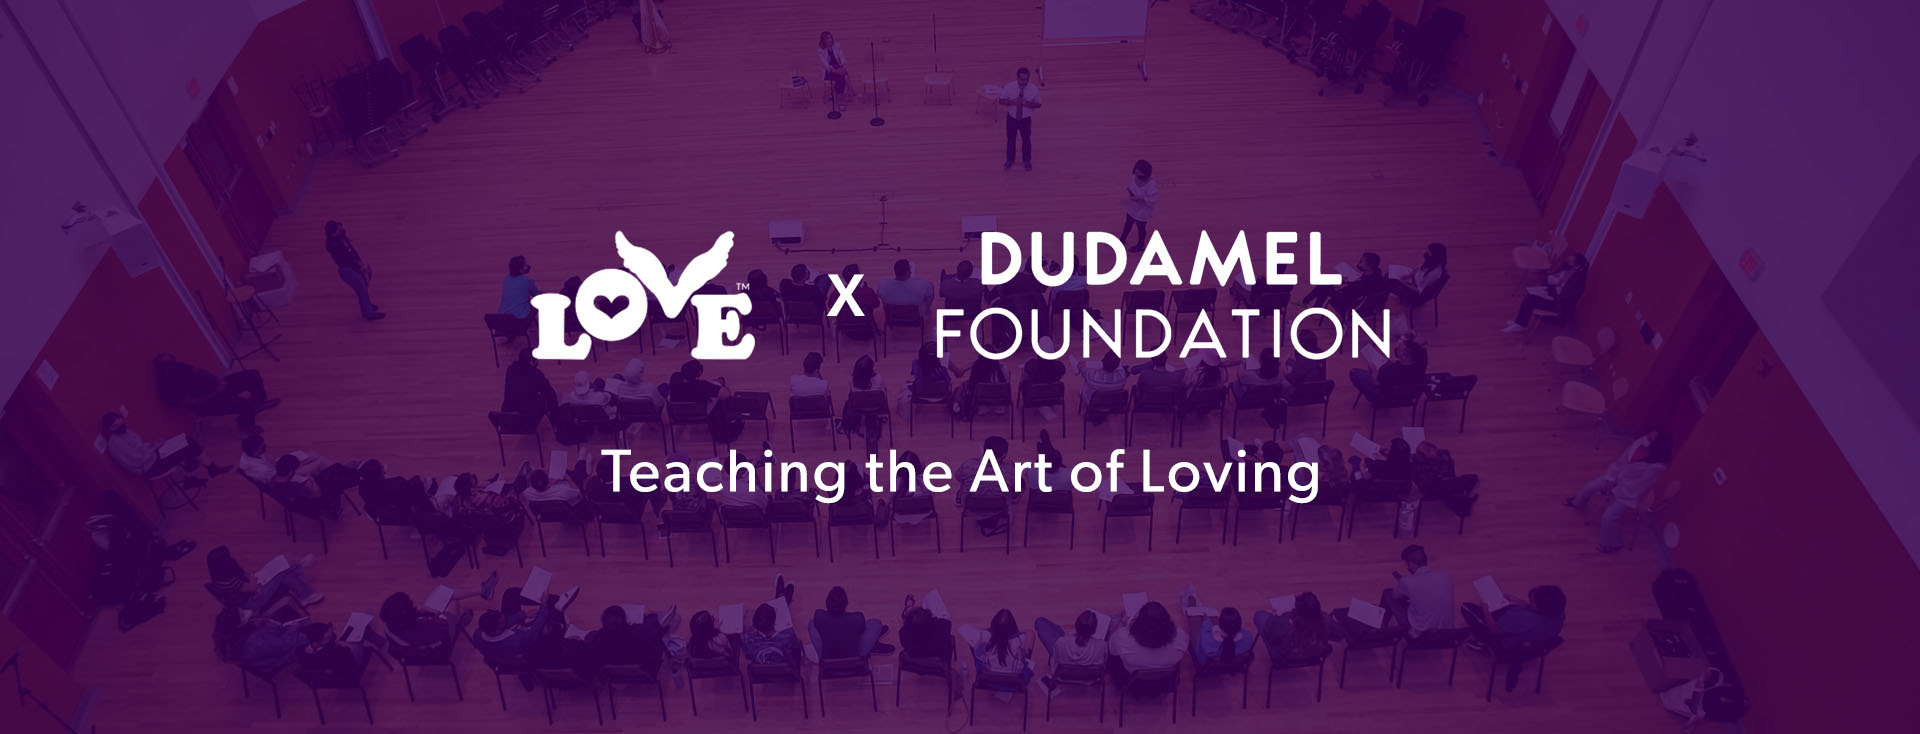 Love Button x Dudamel Foundation: the Art of Loving